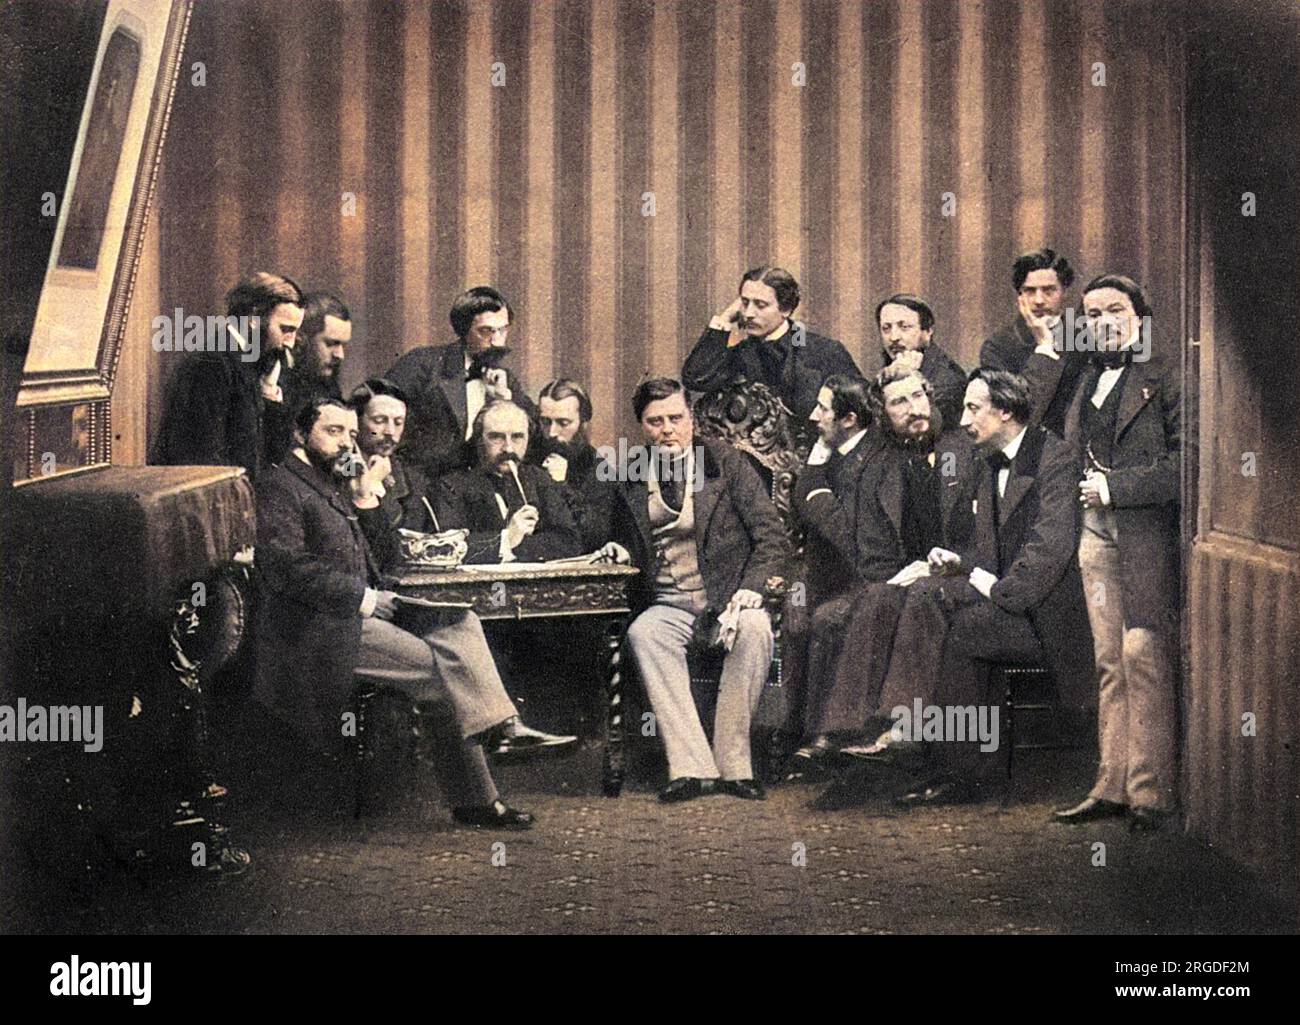 ALEXANDRE comte WALEWSKI (1810 - 1868), Polish-French statesman, ministre des affaires etrangeres, photographed with his staff. Stock Photo